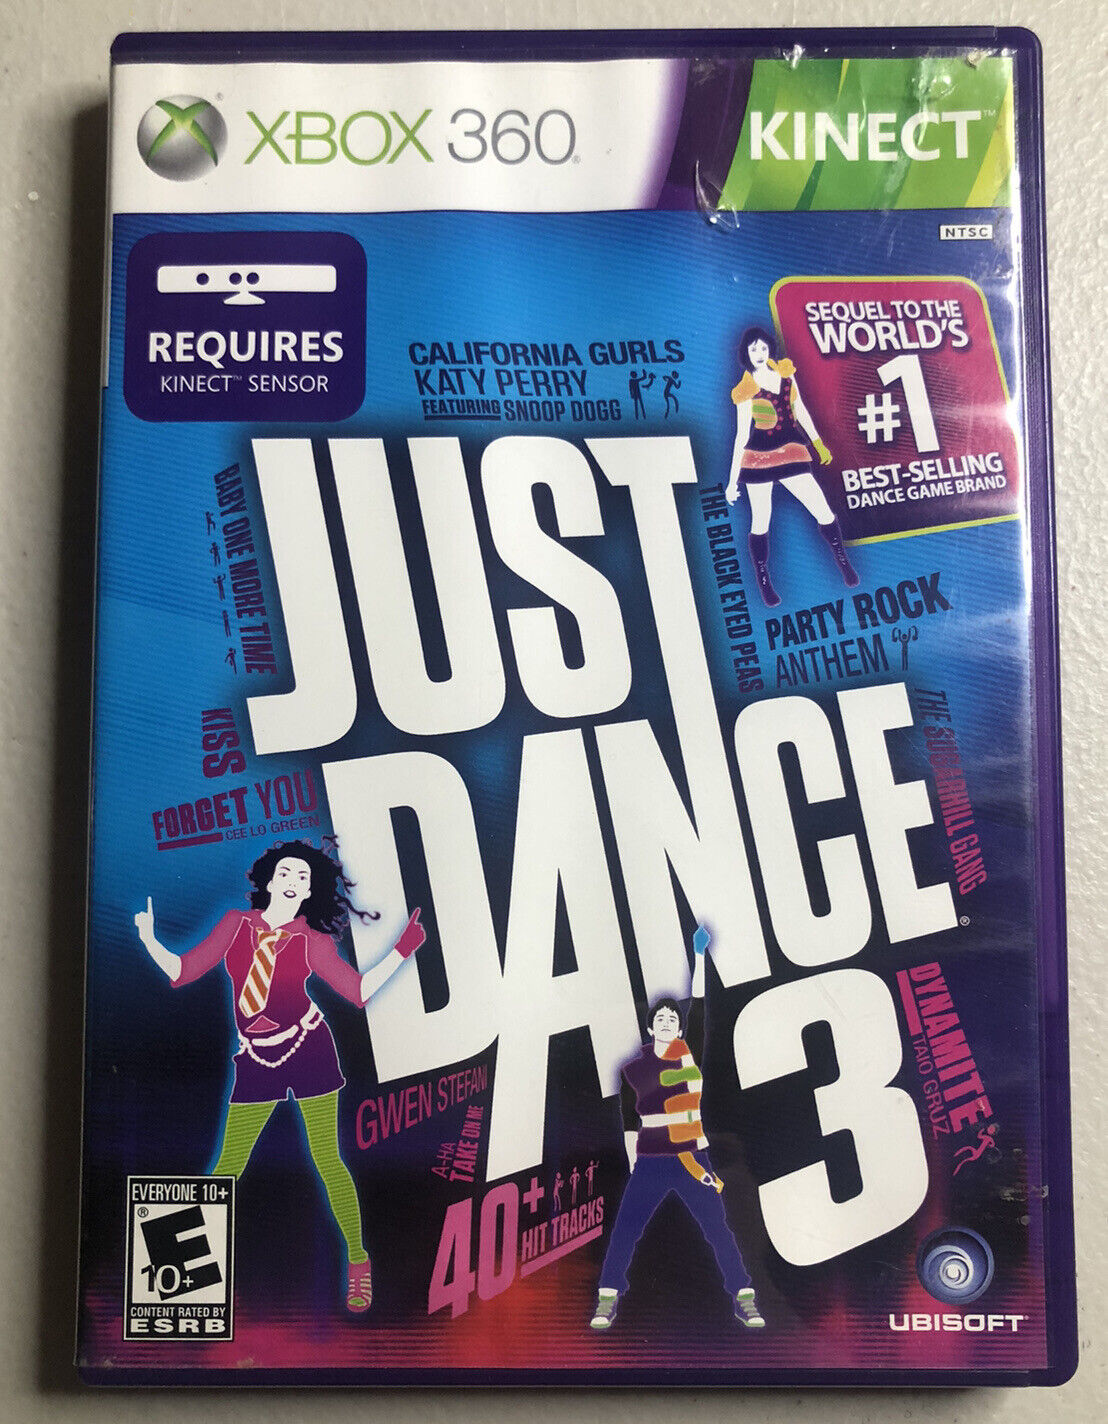 Jachtluipaard regisseur Aziatisch Just Dance 3 (Microsoft Xbox 360) Kinect Sensor Required - No Manual  8888526773 | eBay